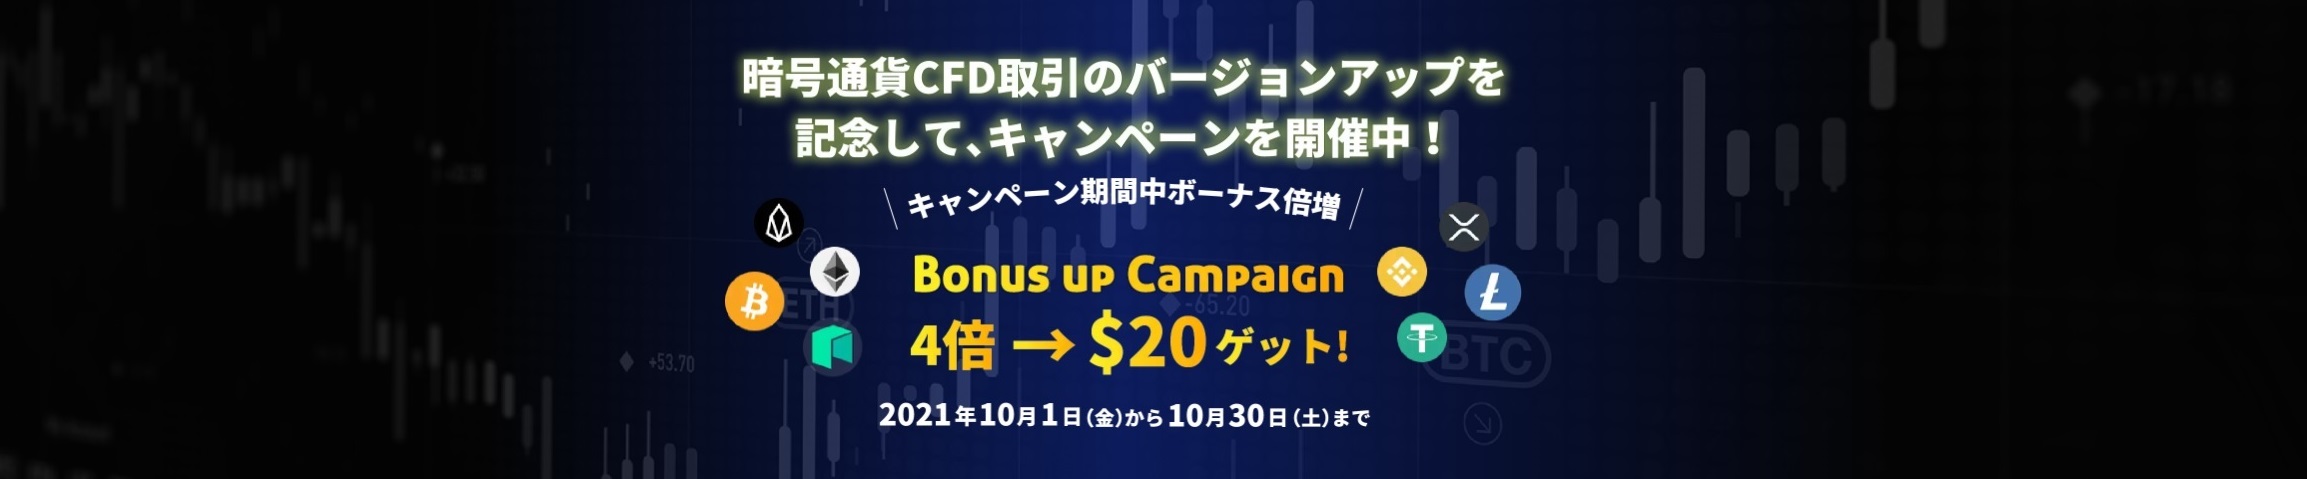 【BigBoss】暗号通貨CFD取引ボーナス4倍キャンペーン